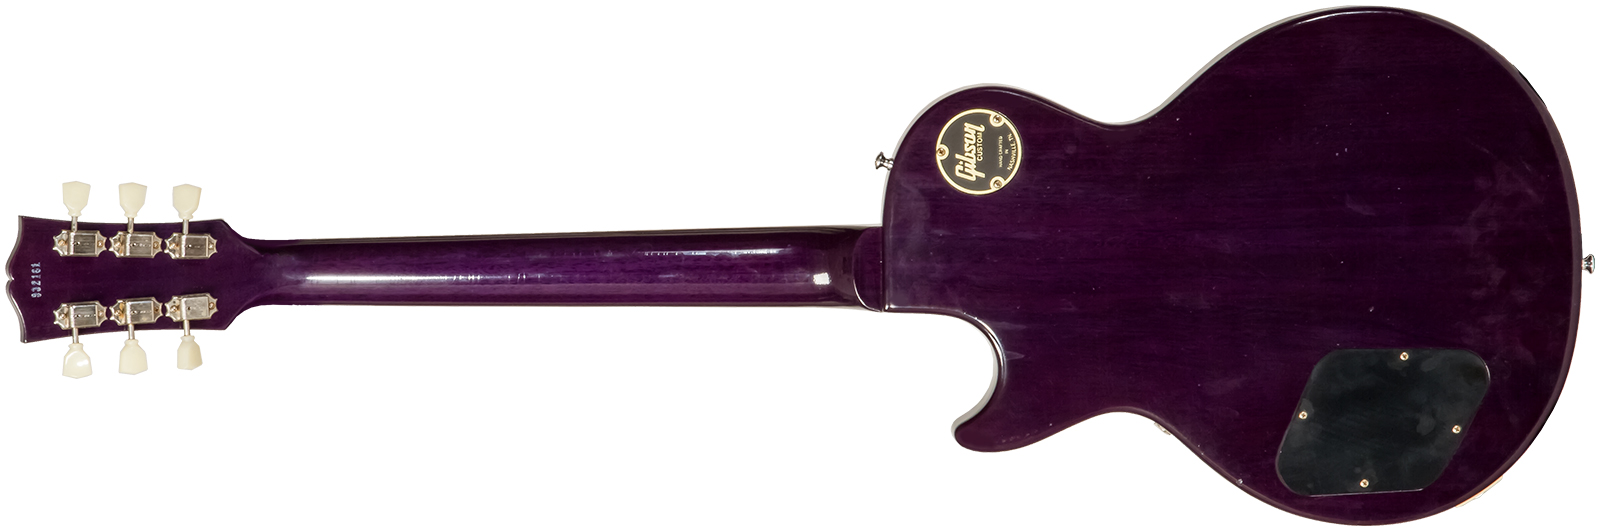 Gibson Custom Shop M2m Les Paul Standard 1959 Reissue 2h Ht Rw #932161 - Murphy Lab Ultra Light Aged Ocean Blue - Single cut electric guitar - Variati